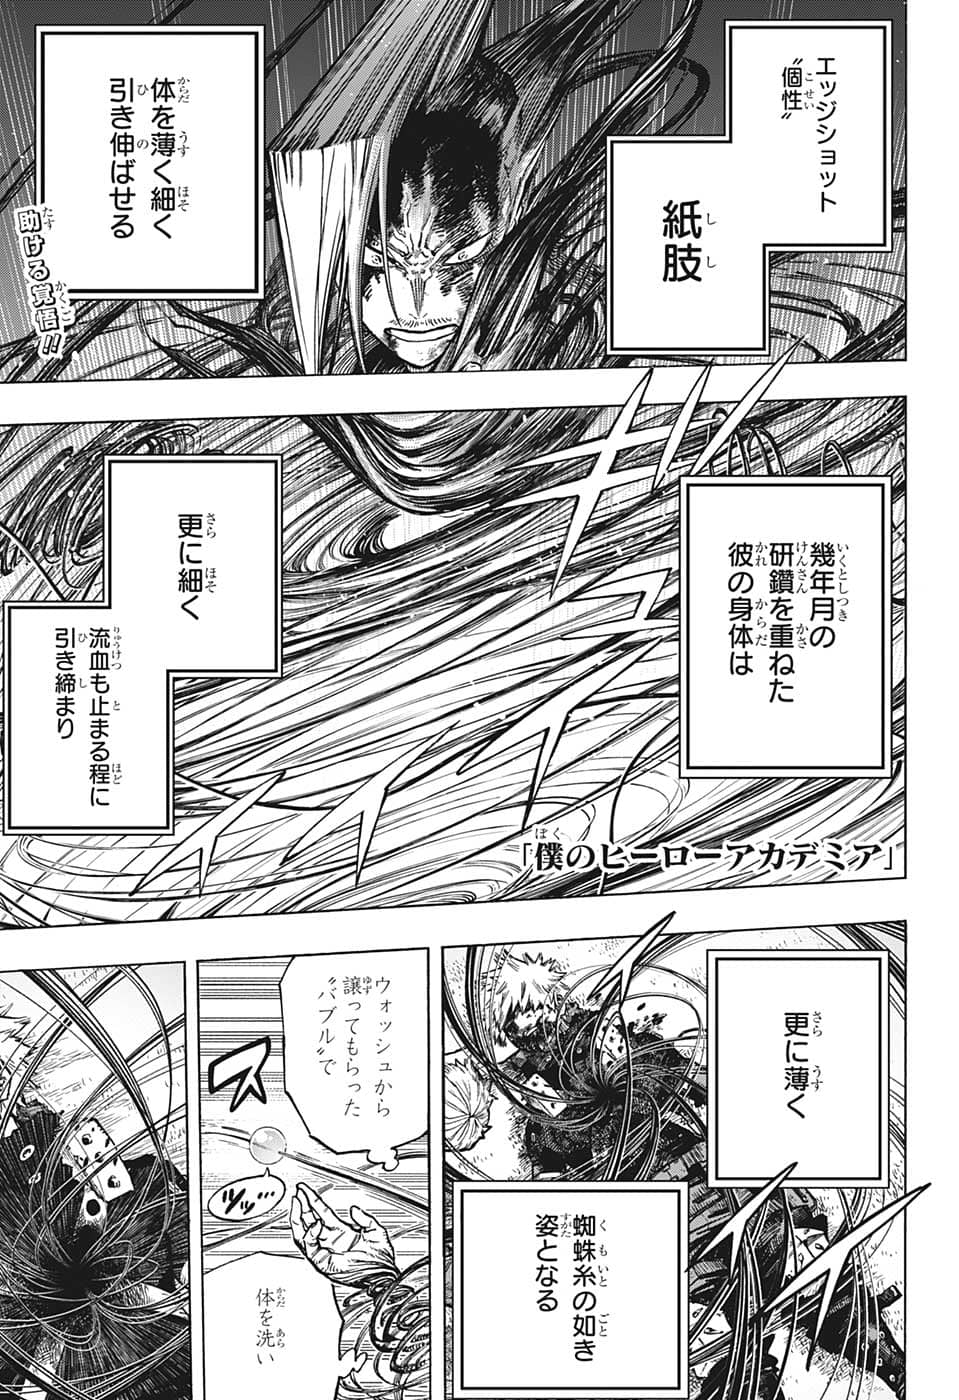 Boku no Hero Academia - Chapter 365 - Page 1